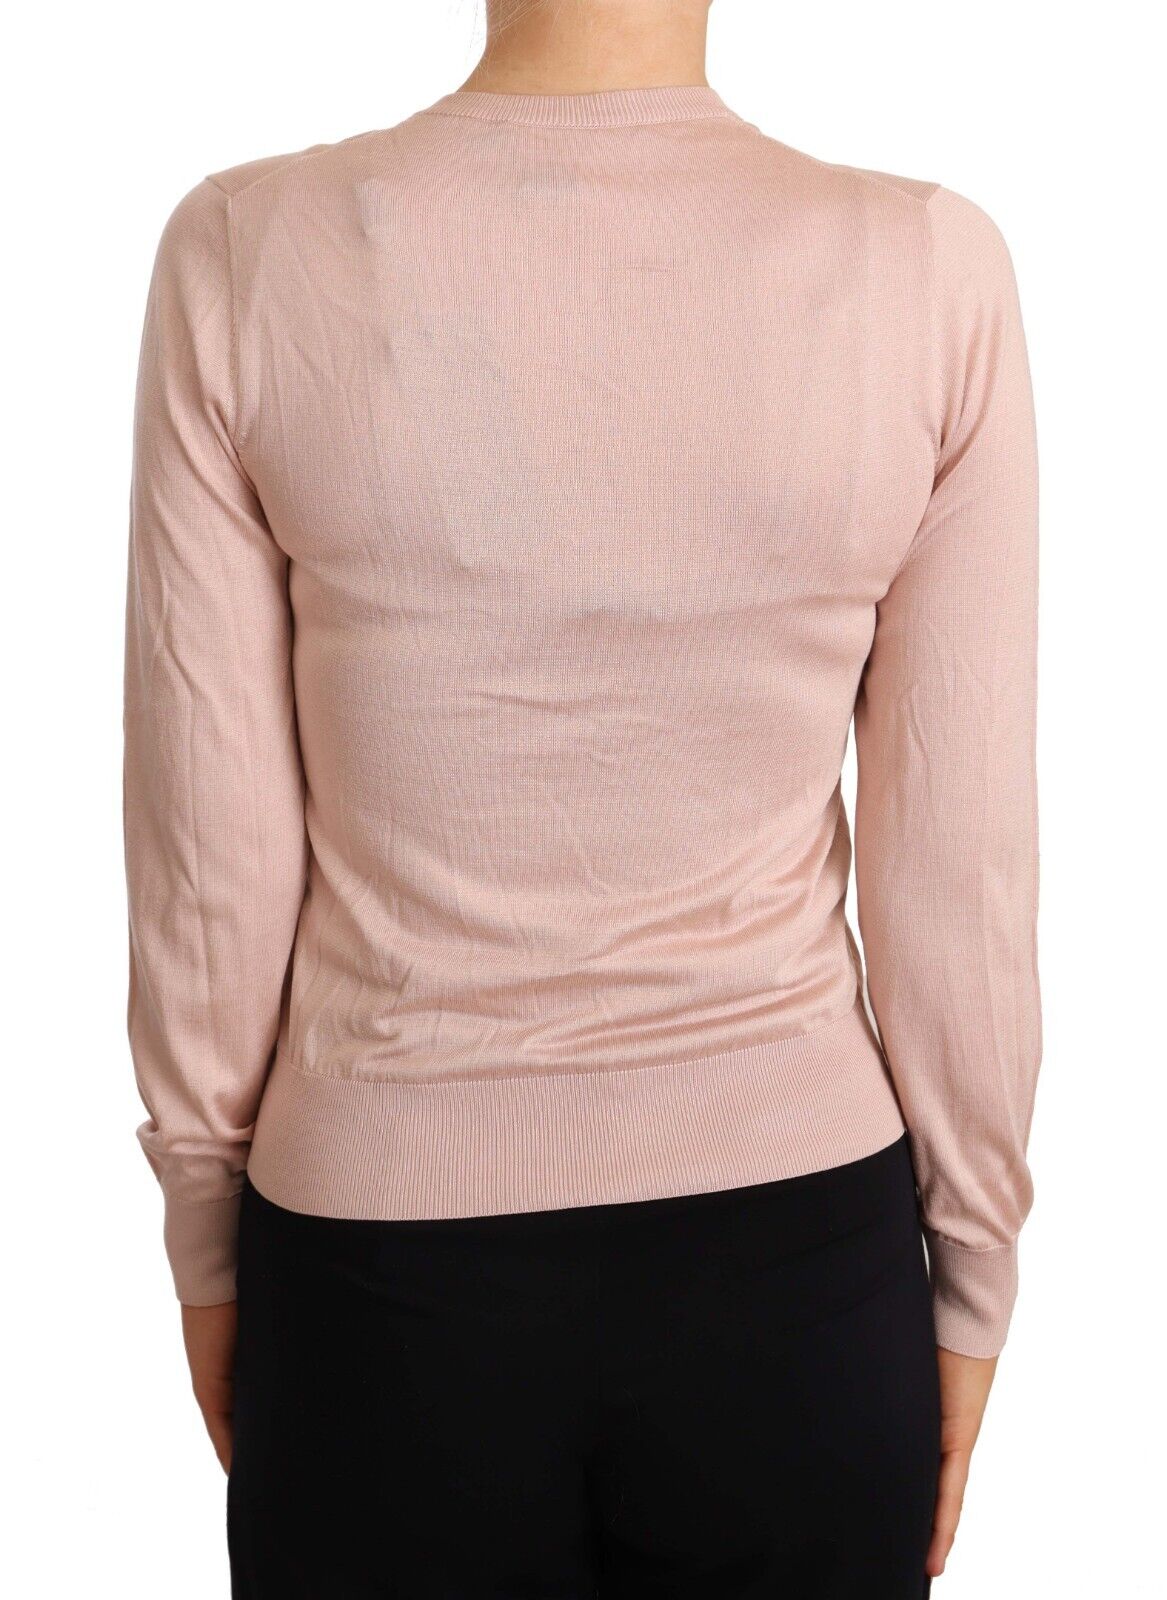 Pink Silk Knit Rose Button Cardigan Sweater